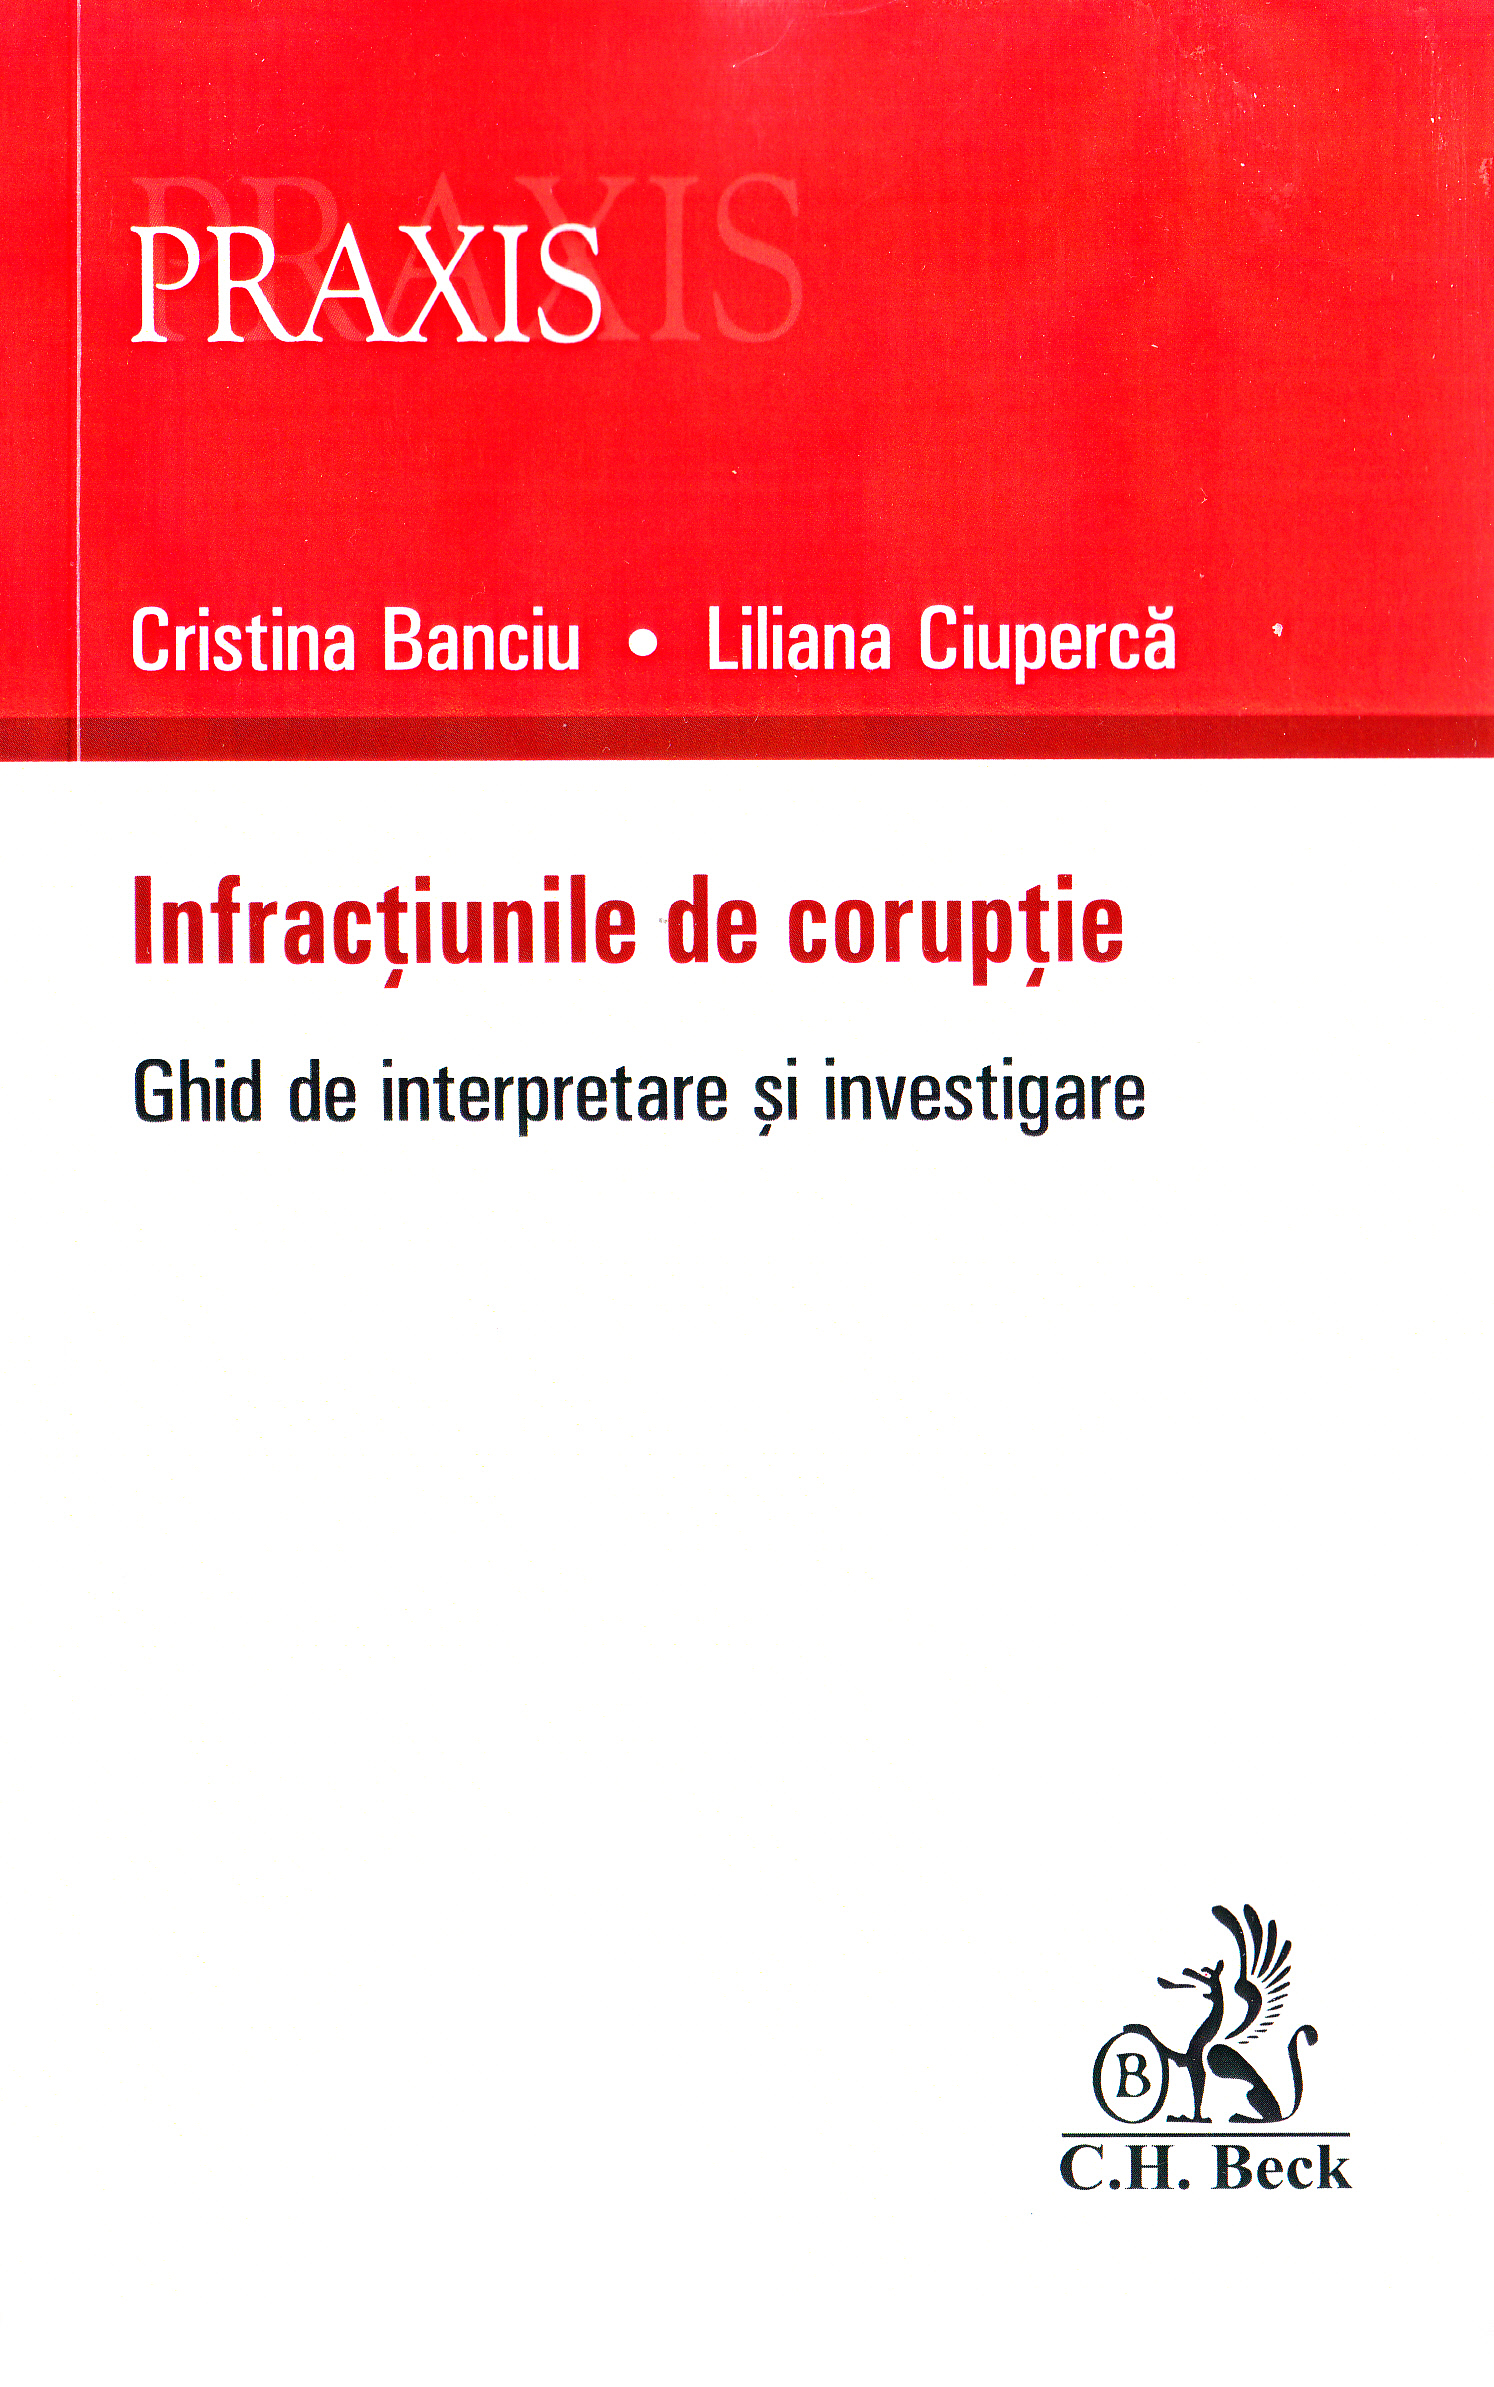 Infractiunile de coruptie - Cristina Banciu, Liliana Ciuperca